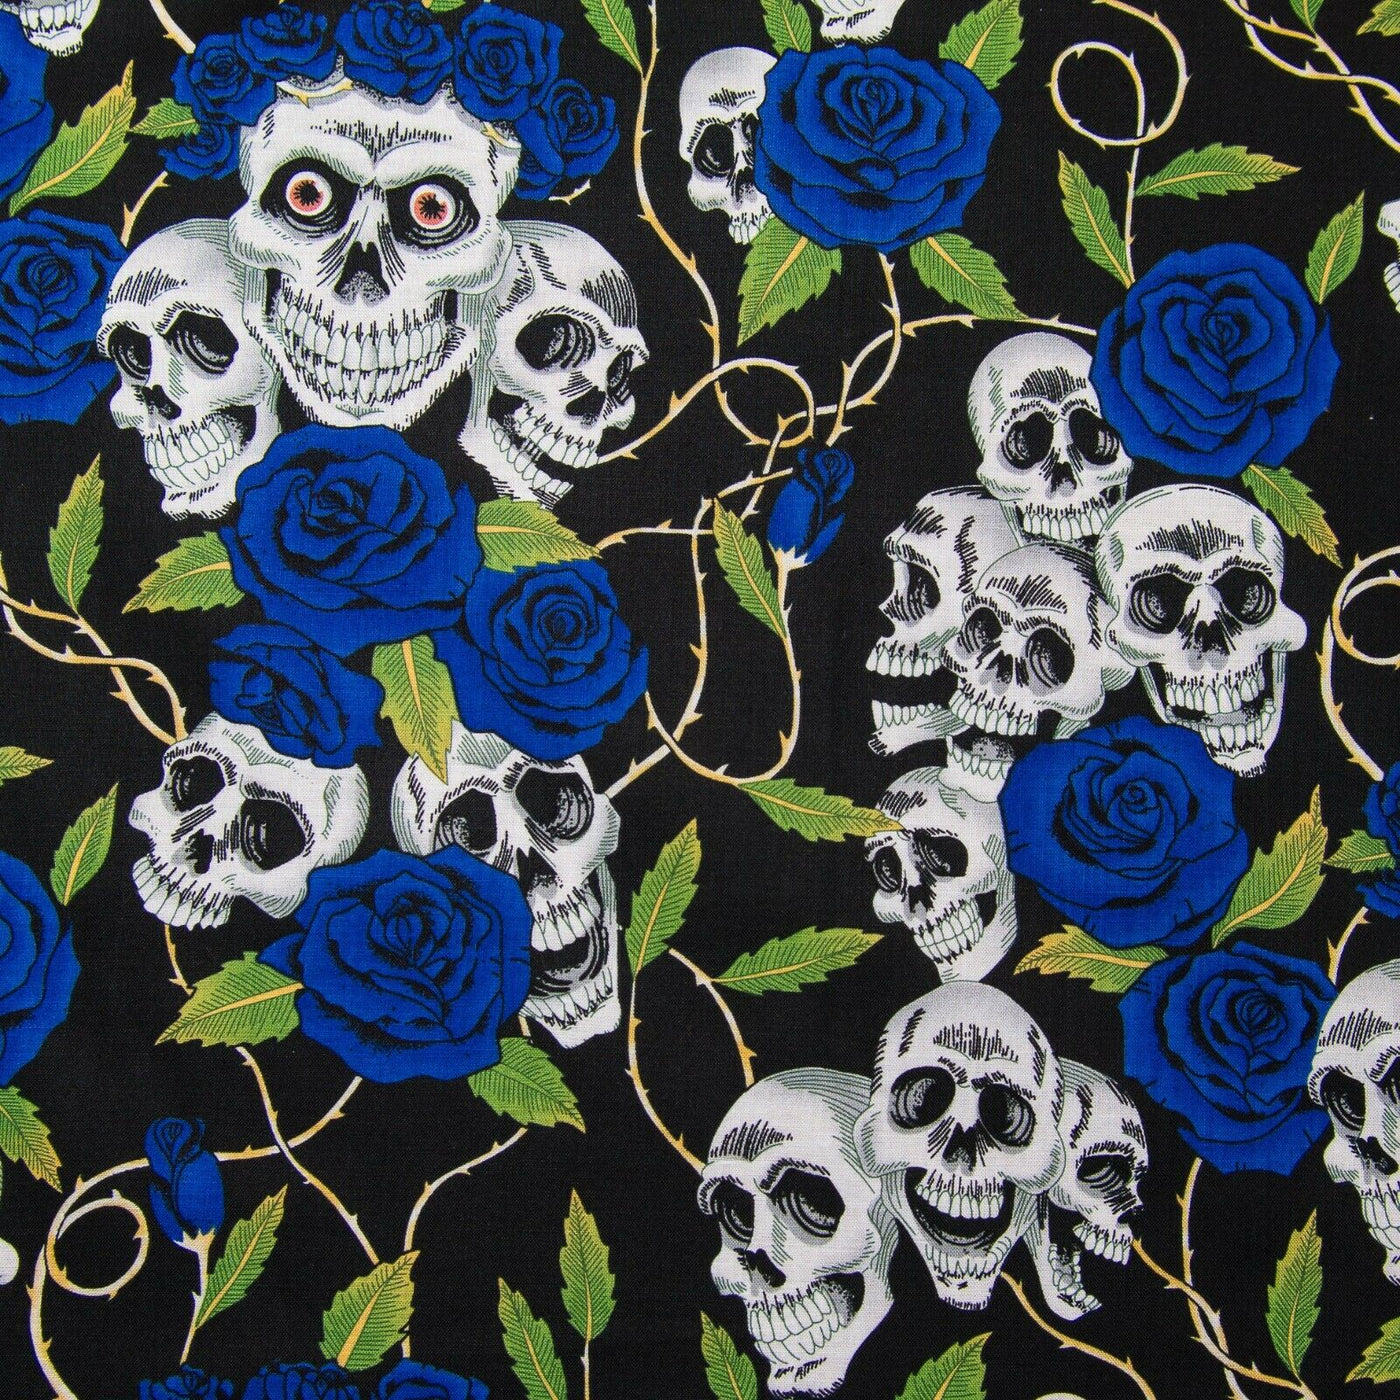 Day of the dead Skulls & Roses Gothic Bandana Head Band Scarf Chemo Biker